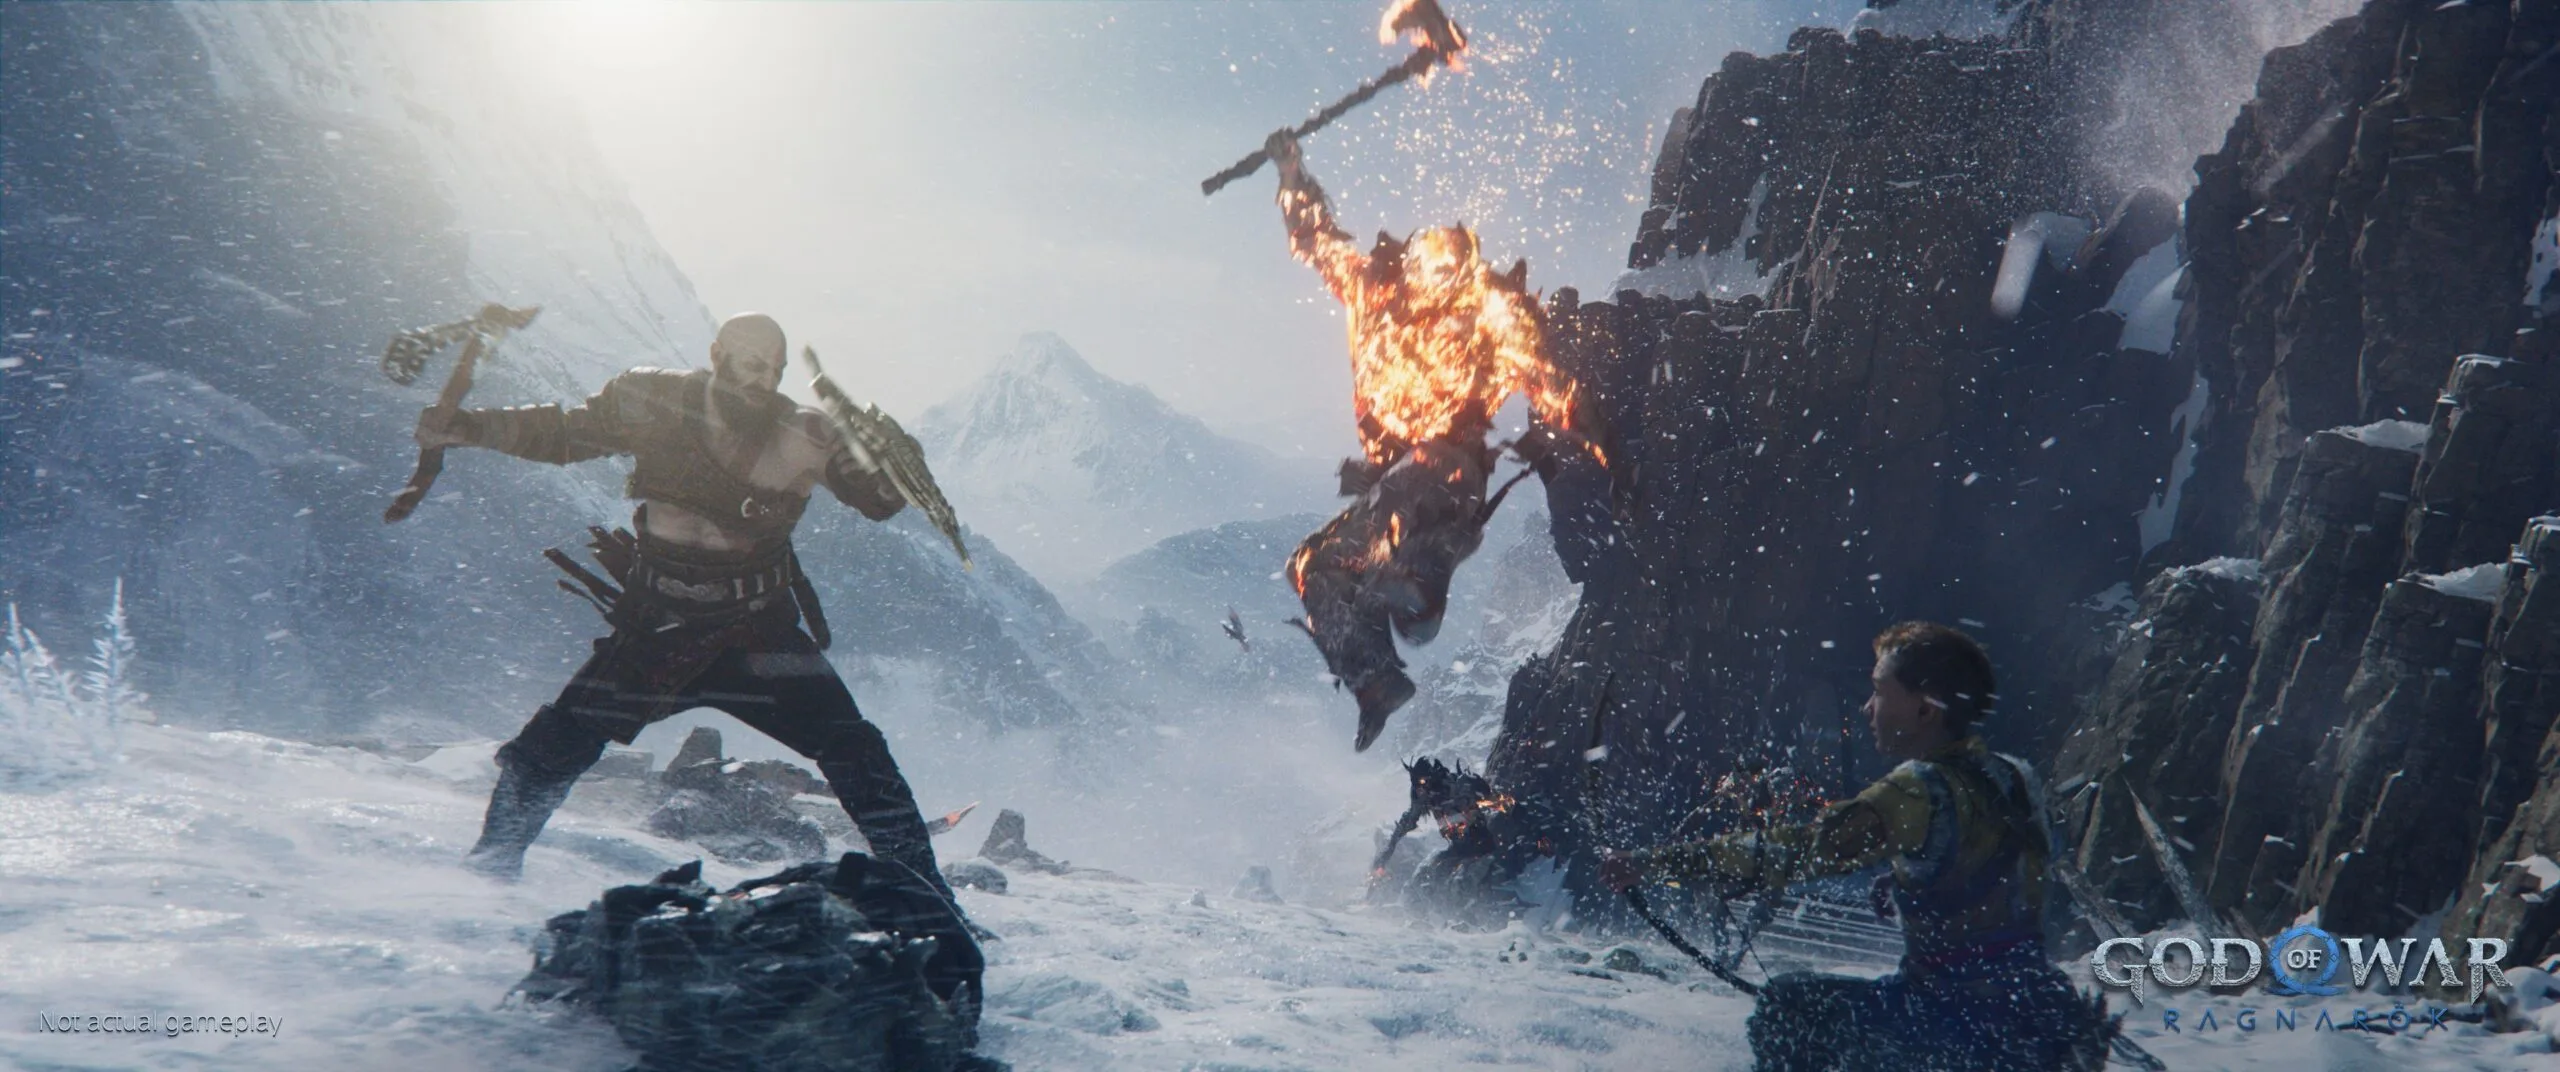 'God of War Ragnarok' hits PS5, PS4 on November 9th